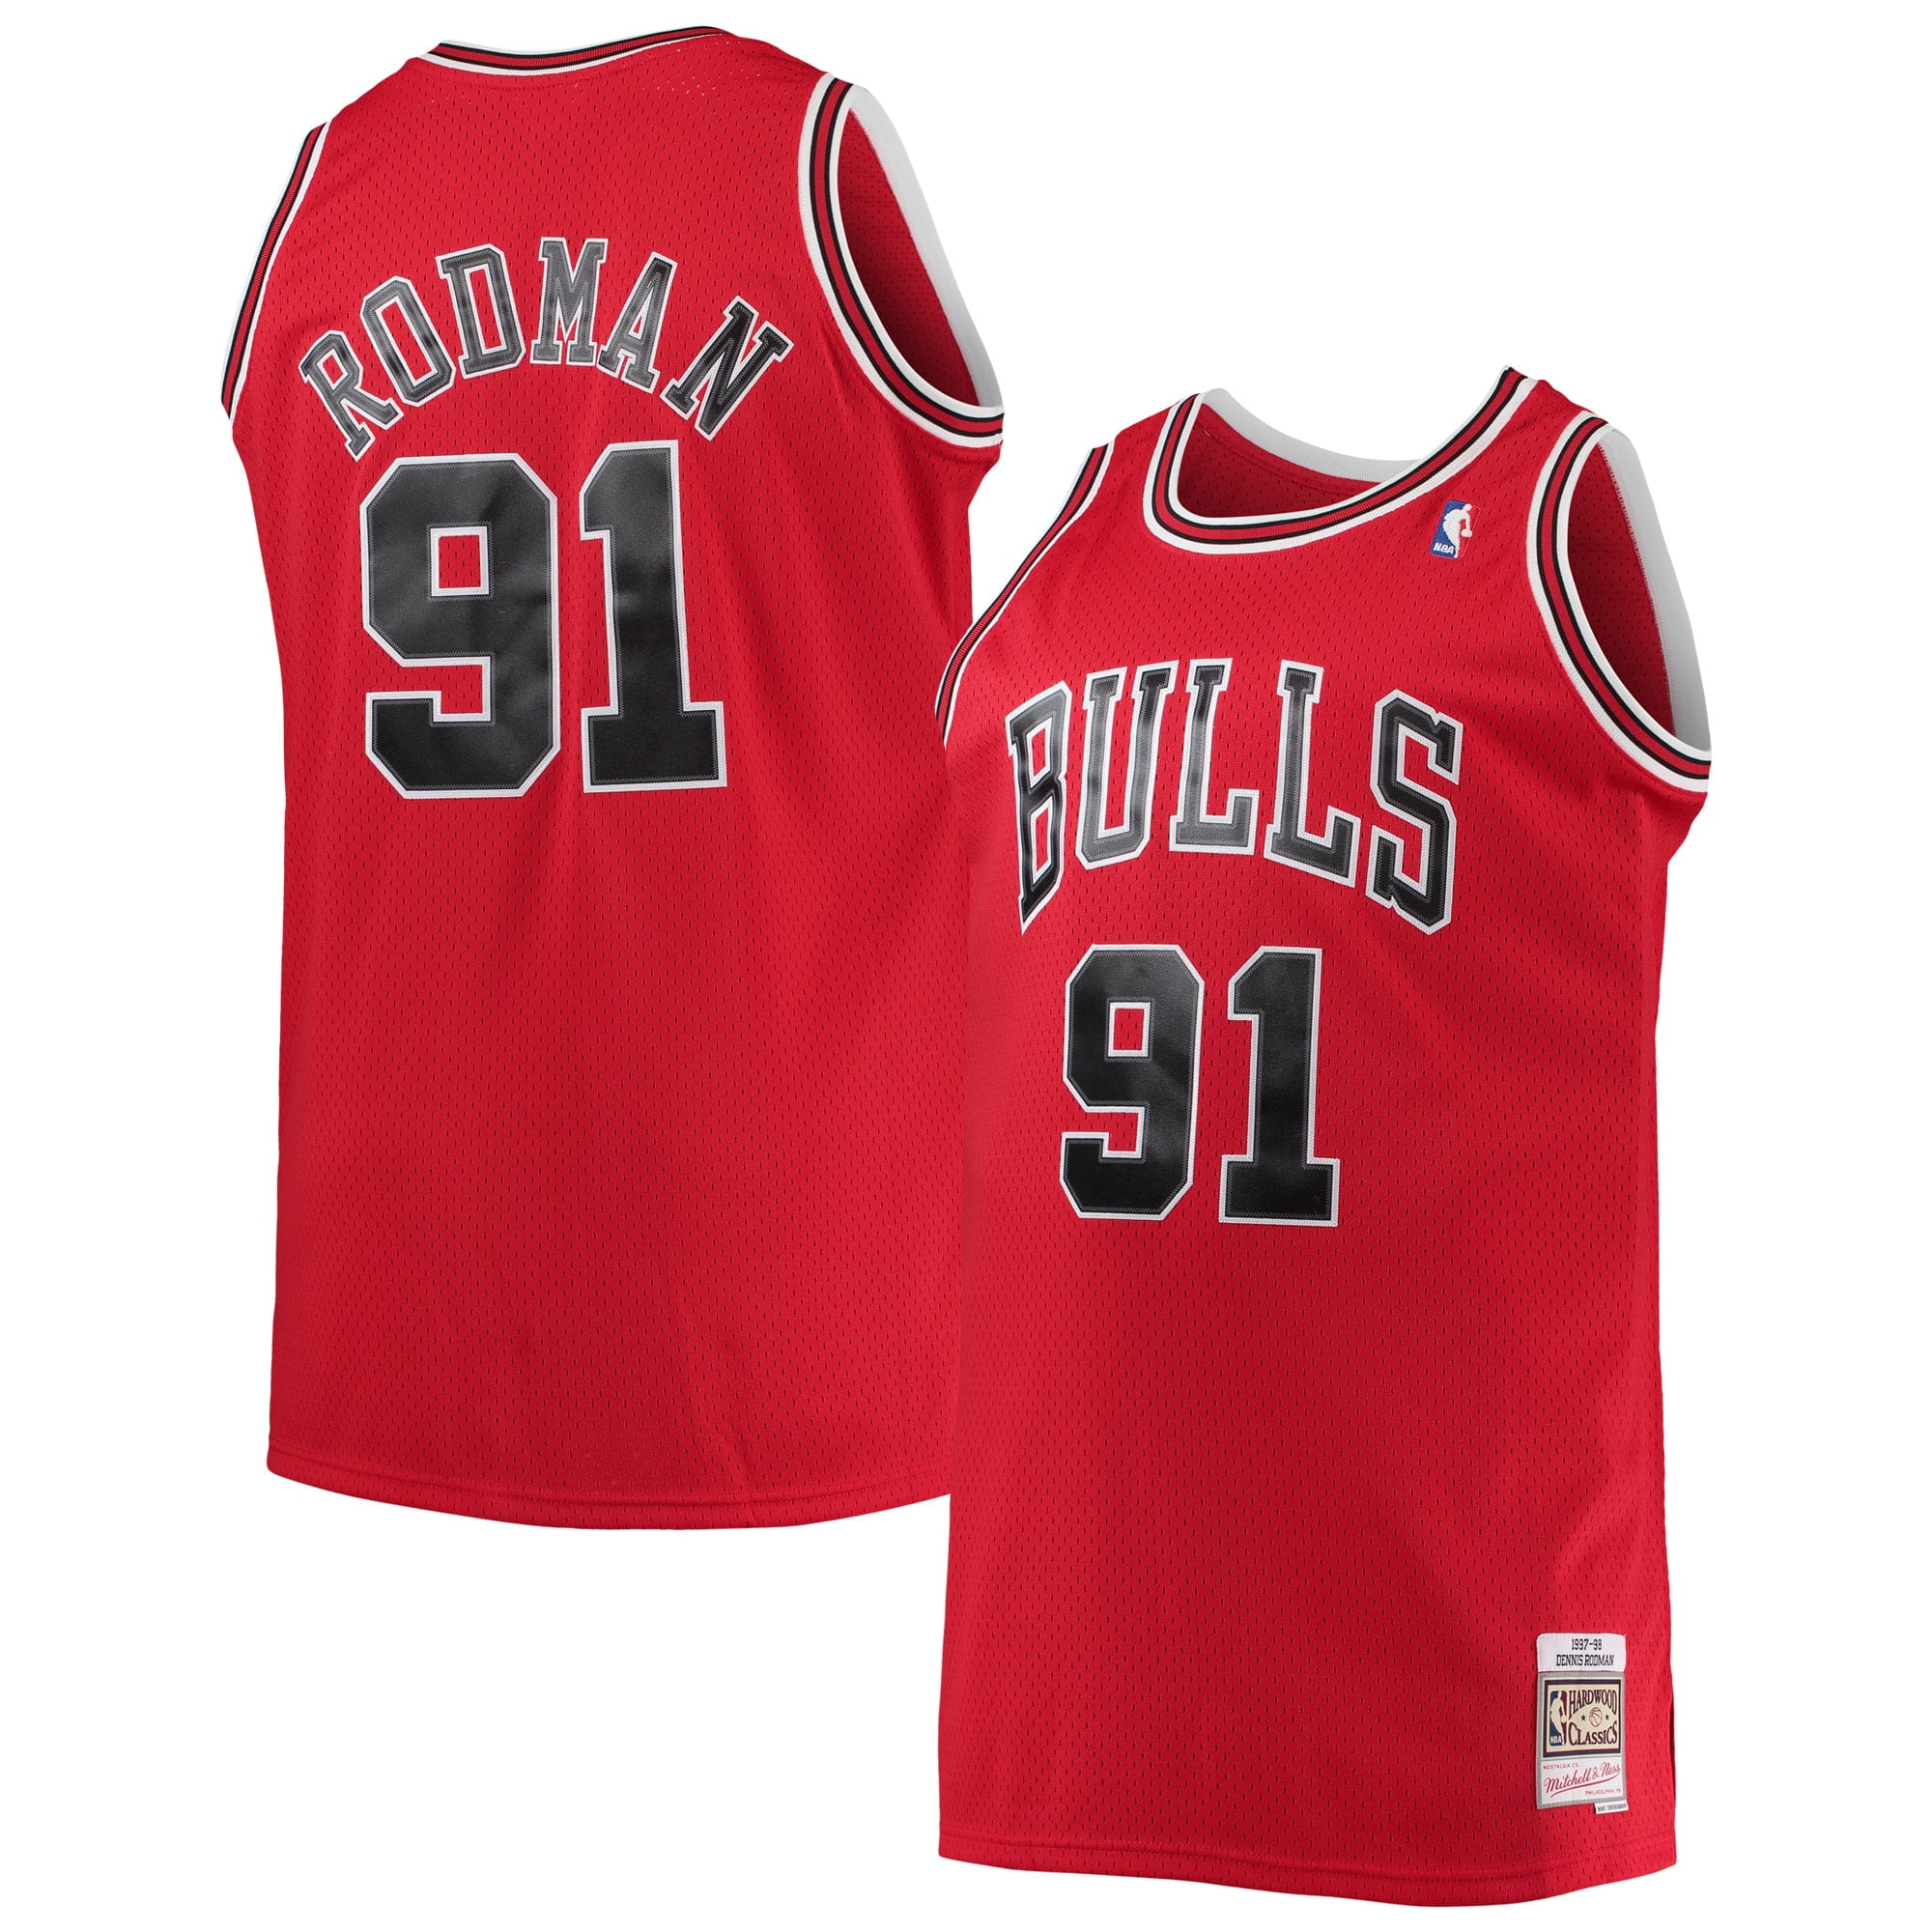 1998 Finals Dennis Rodman Chicago Bulls 91 Swingman Basketball Jersey Stitched # 